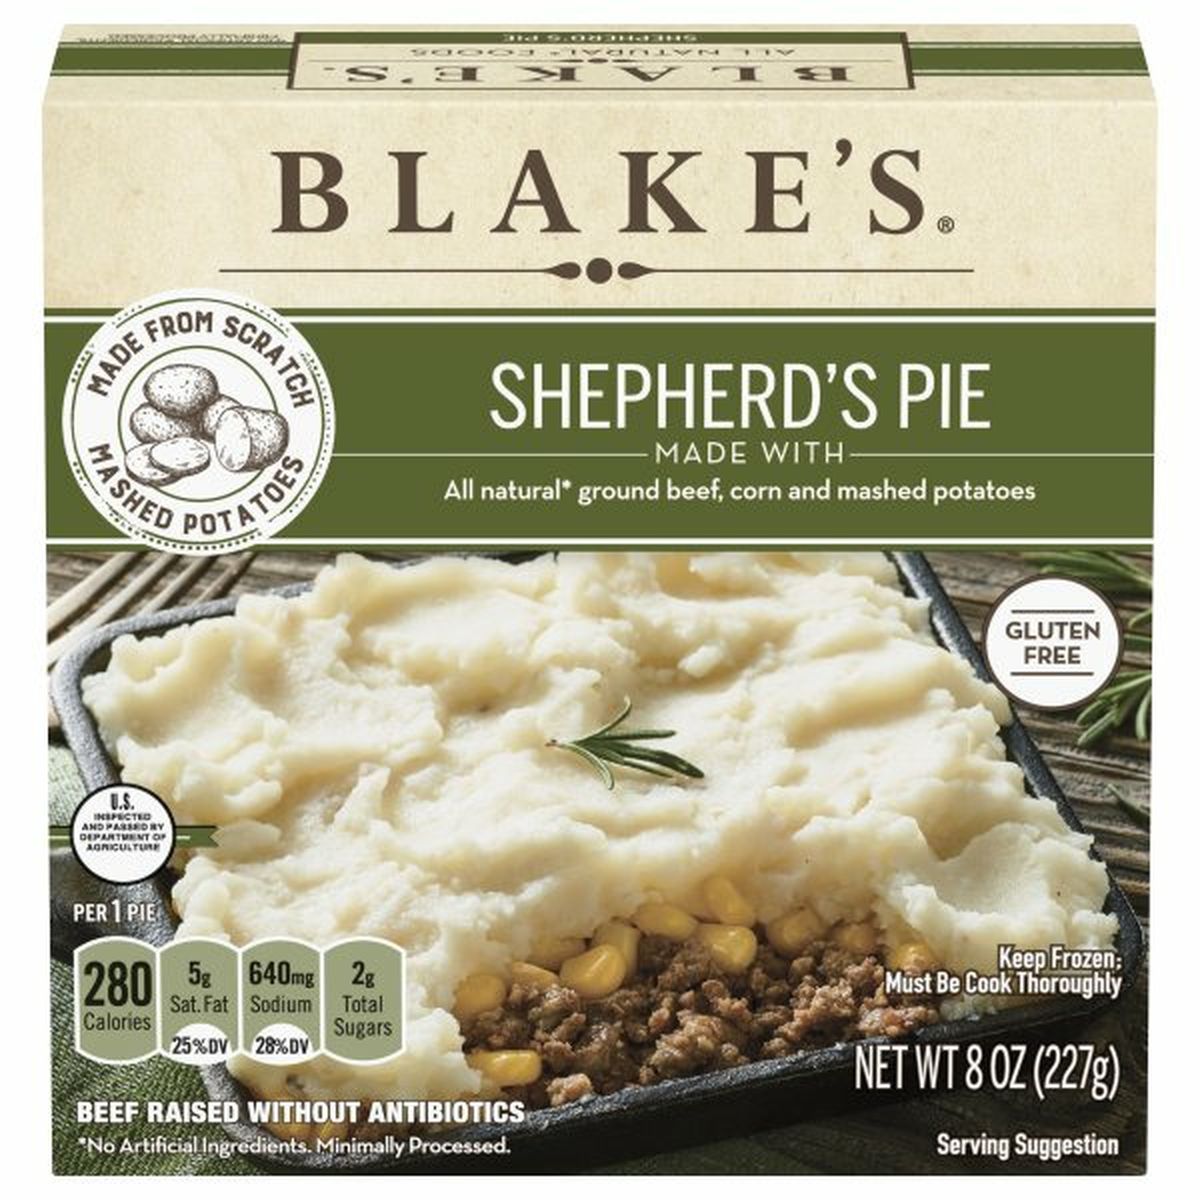 Calories in Blake's Shepherd's Pie